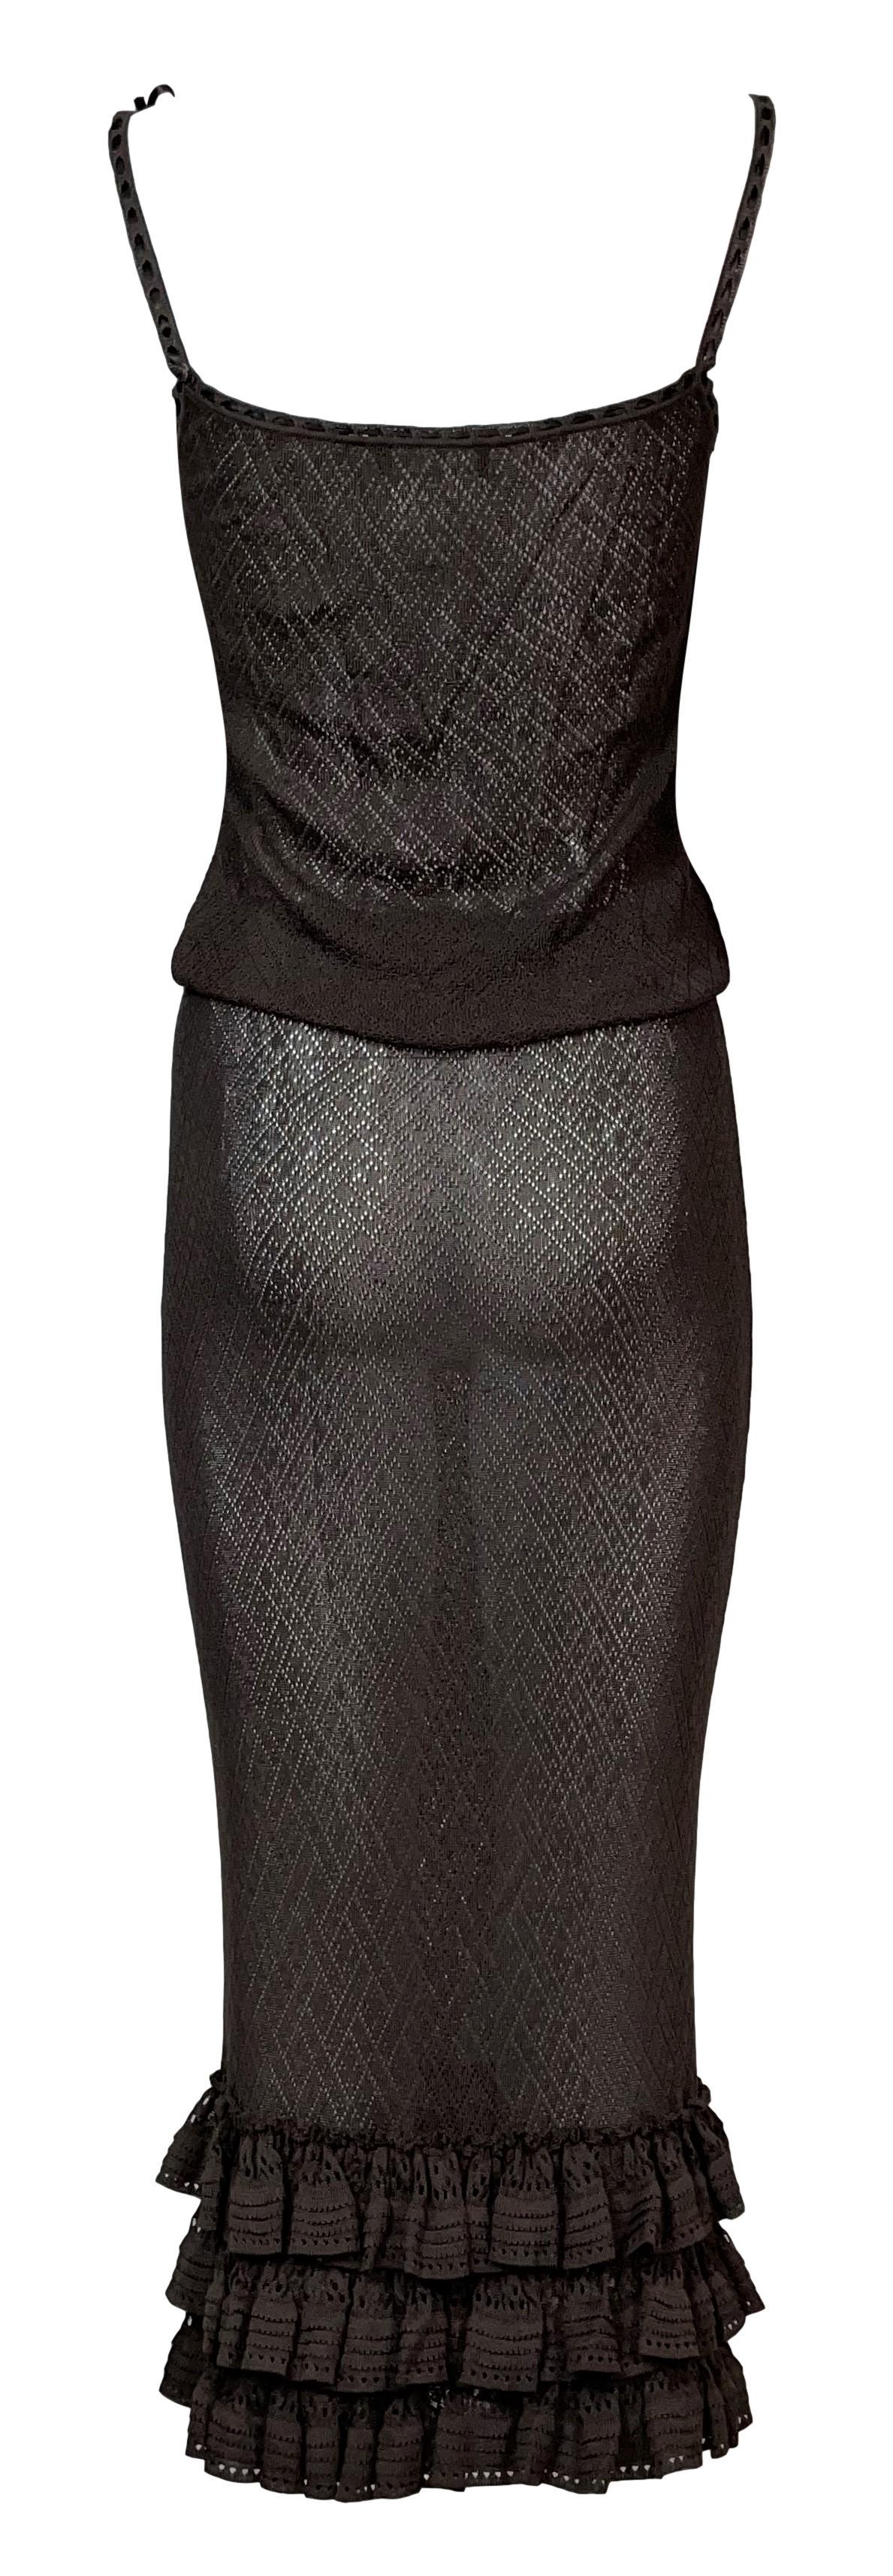 Black S/S 2006 Christian Dior John Galliano Sheer Brown Knit Top & Skirt Set